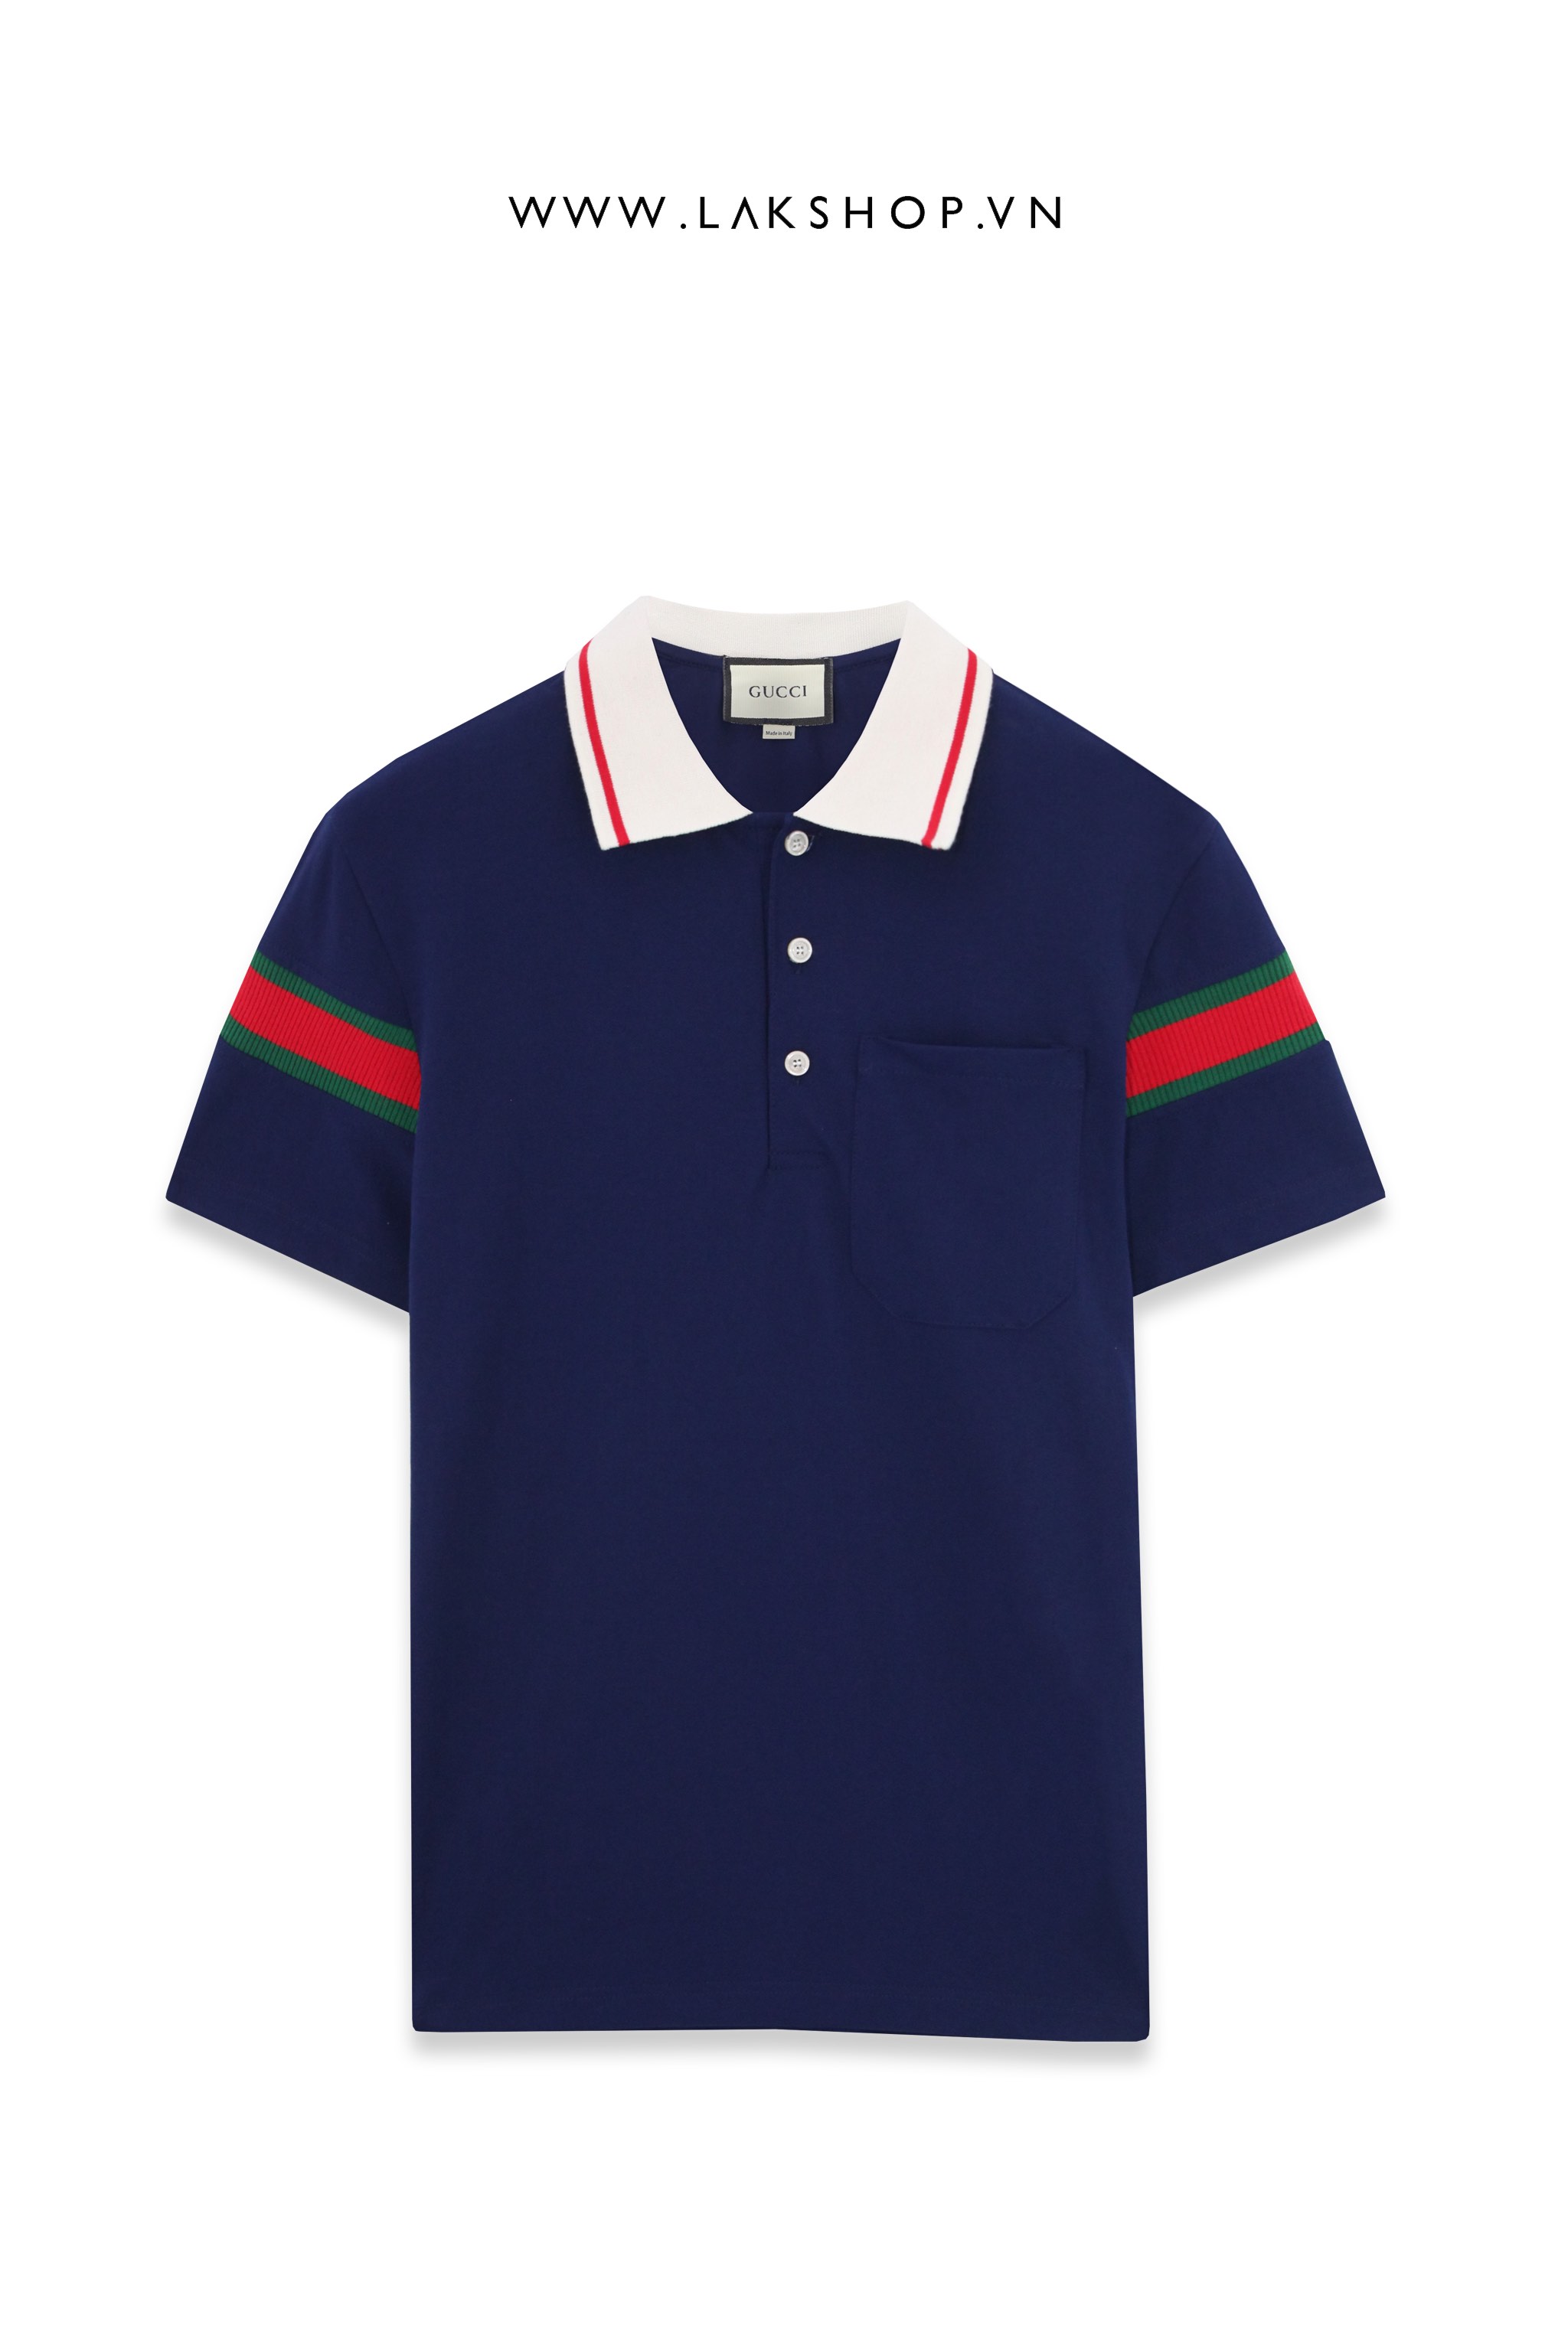 Guccj Navy with Web Stripe Polo Shirt